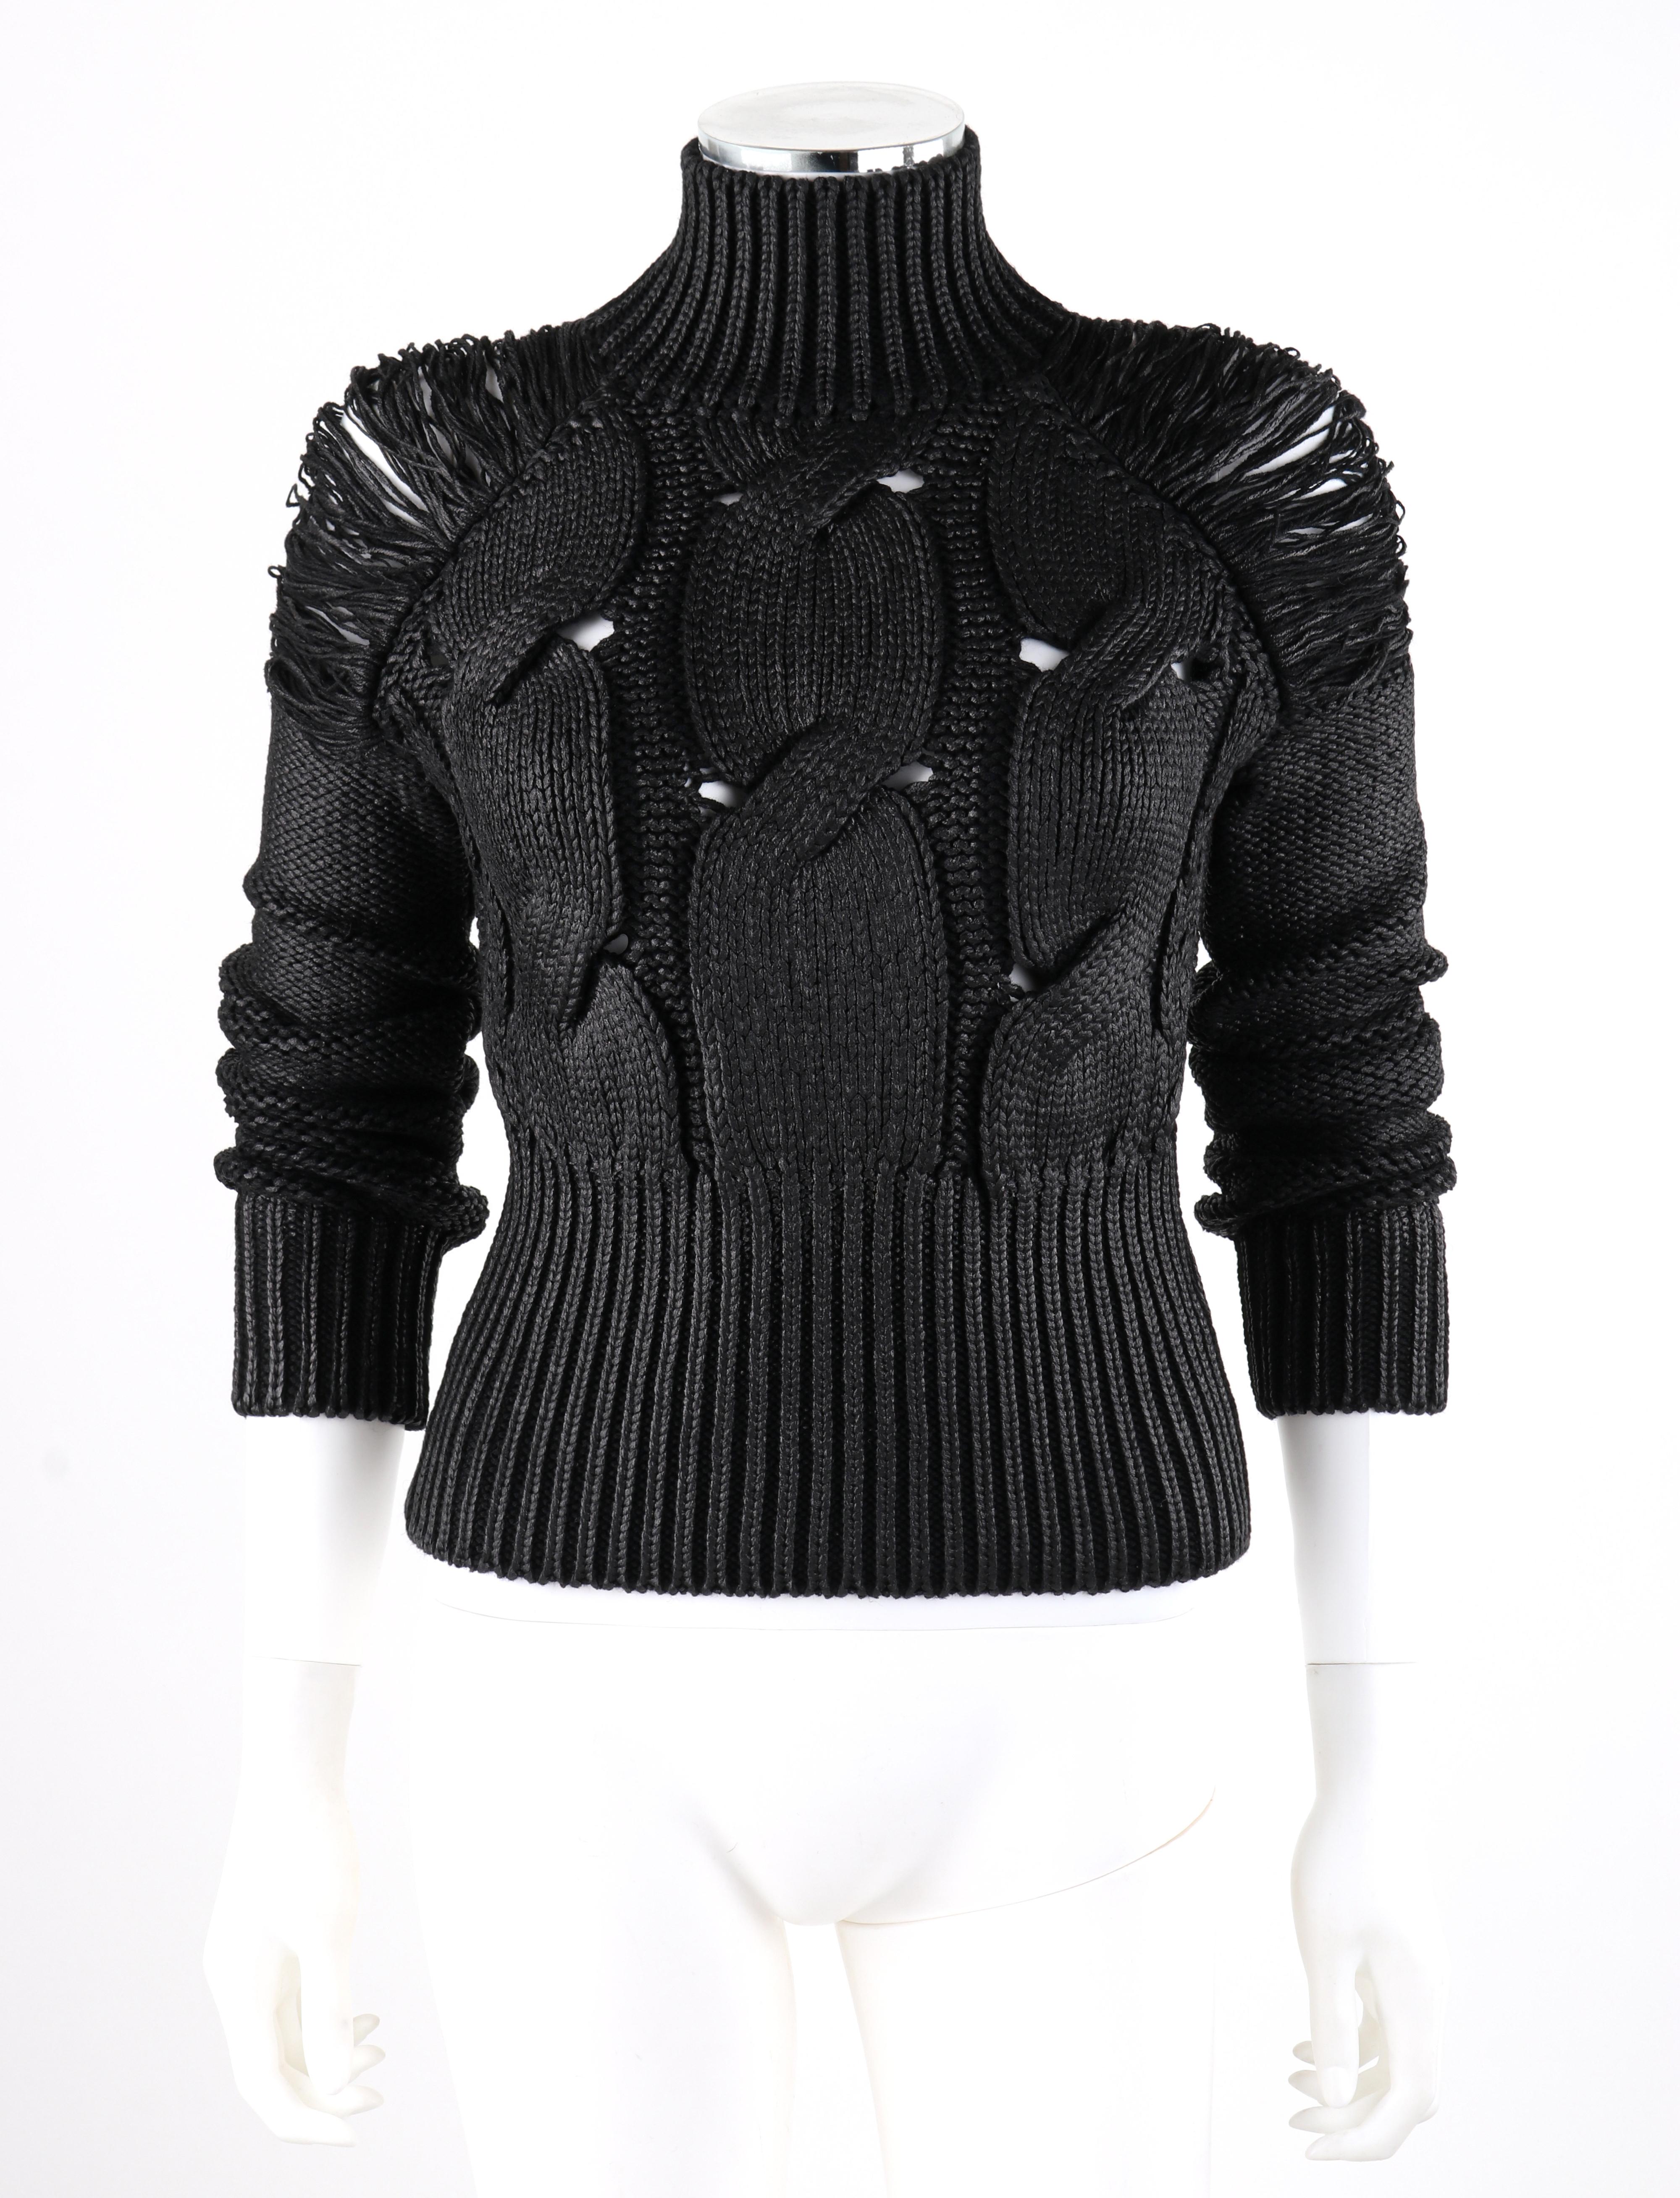 ALEXANDER McQUEEN c.2001 Black Metallic Glazed Distressed Turtleneck Sweater

Brand / Manufacturer: Alexander McQueen
Designer: Alexander McQueen
Collection: c.2001
Style: Turtleneck sweater
Color(s): Shades of black, metallic black (finish)
Lined: